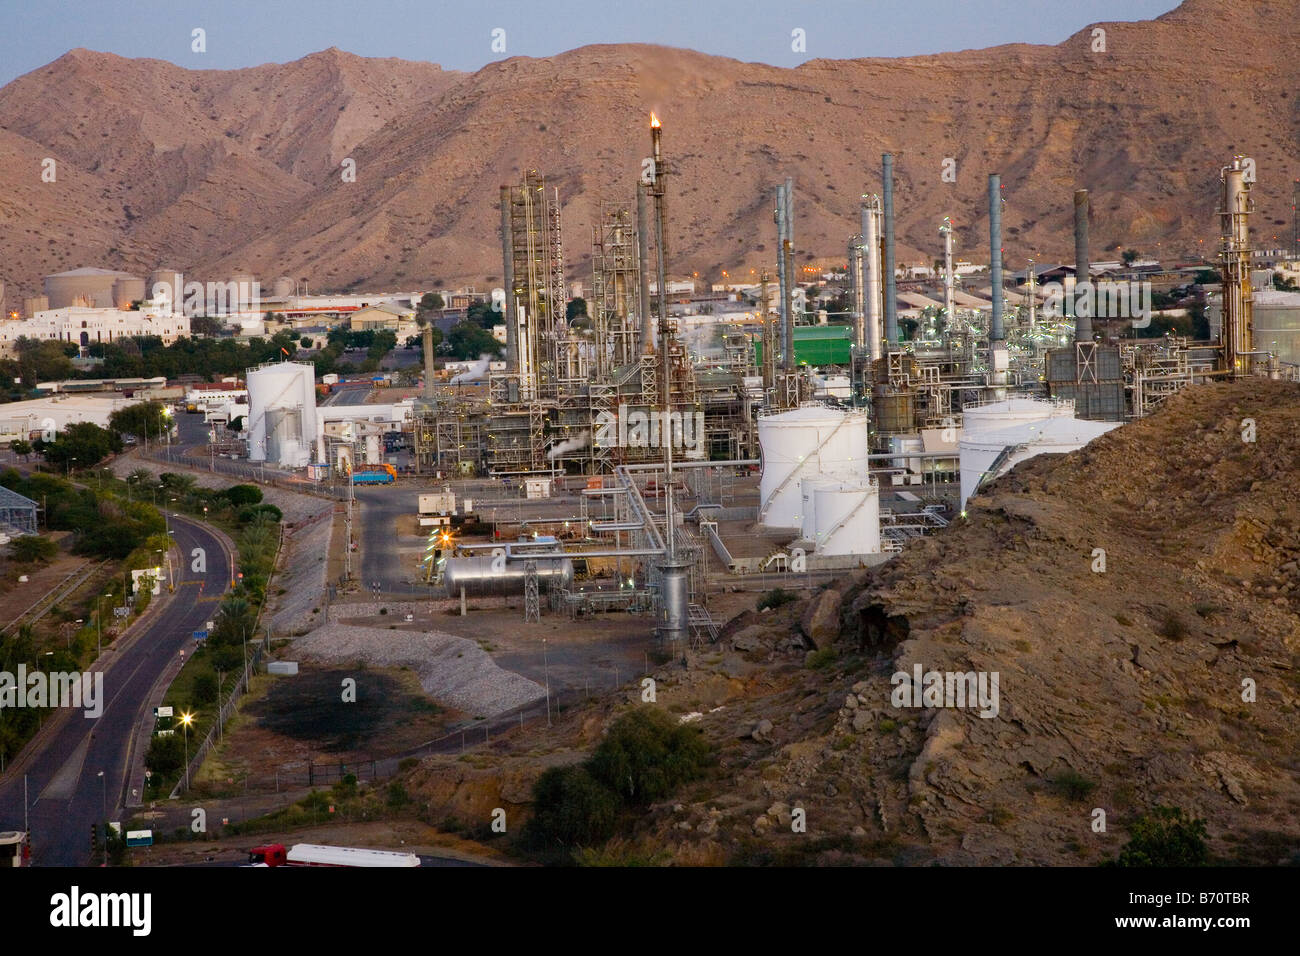 Oil refinery at PDO (Petroleum Development Oman) in Oman Stock Photo